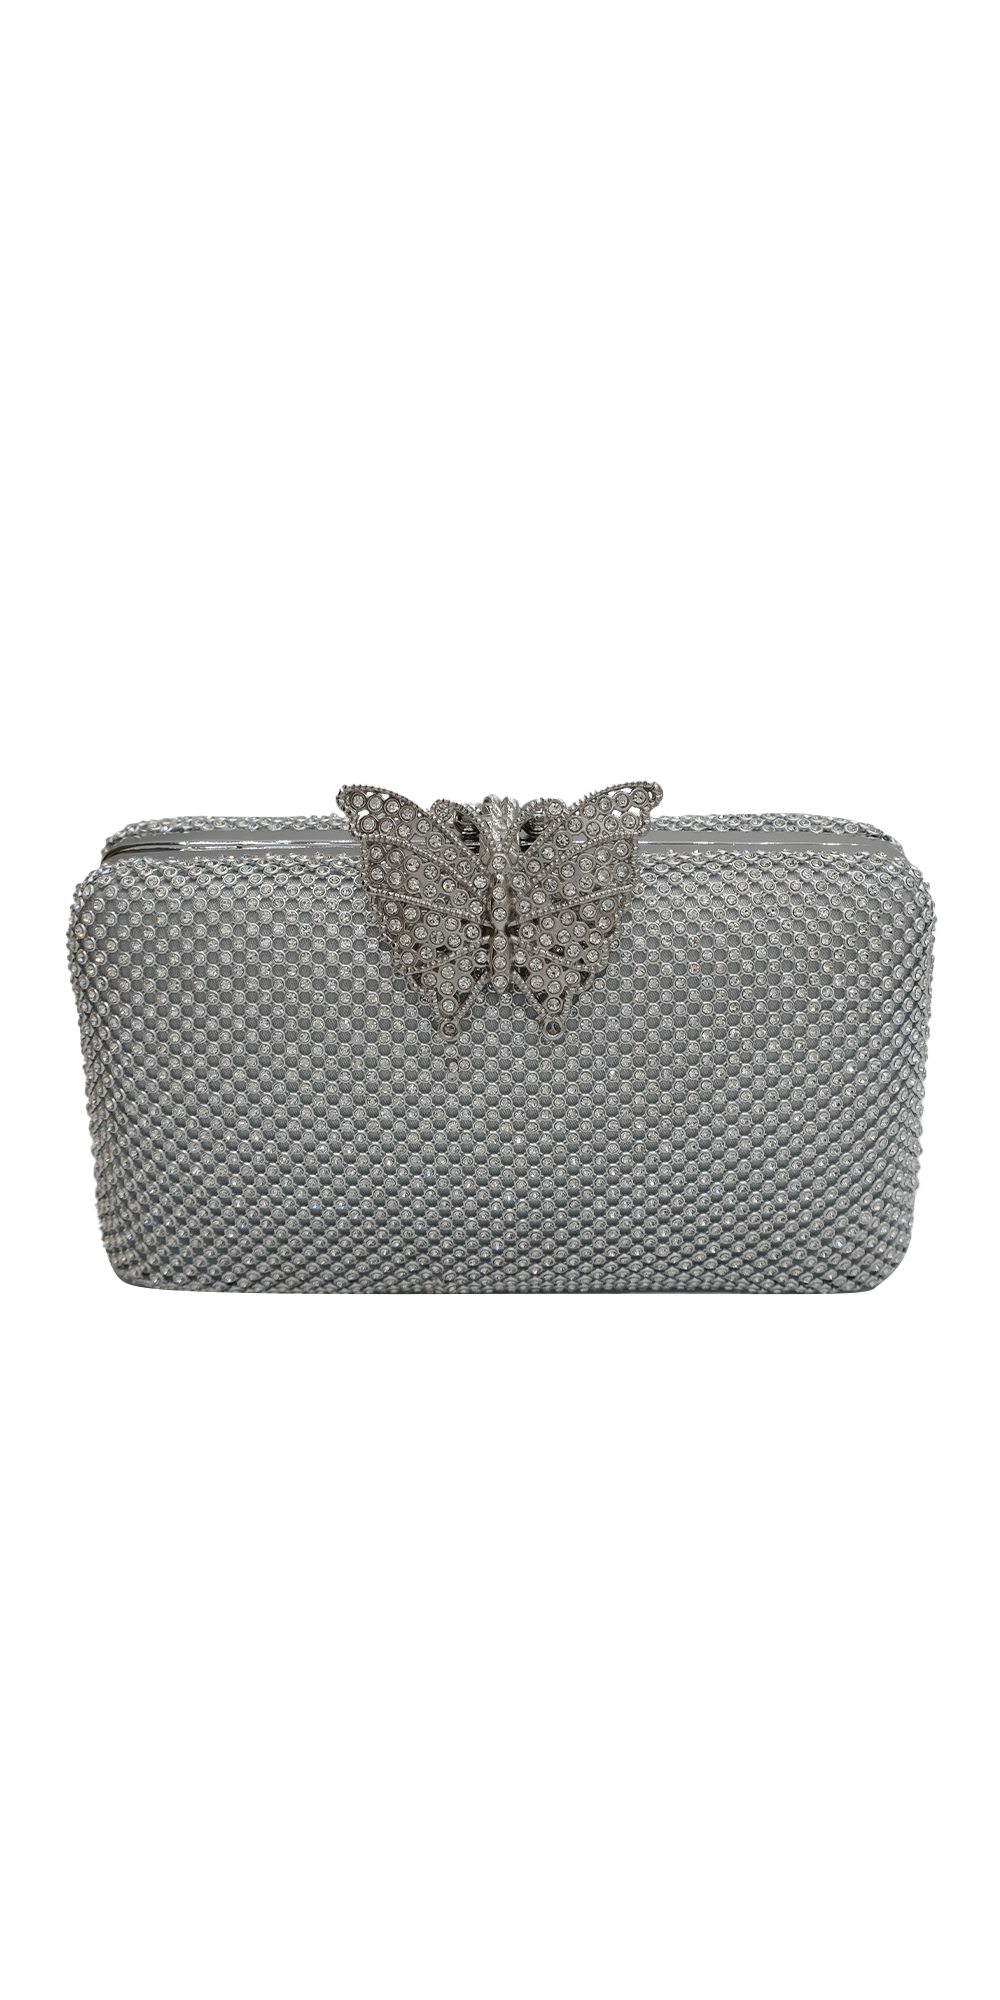 Camille La Vie Mesh Rhinestone Handbag with Butterfly Top Clasp no size / silver